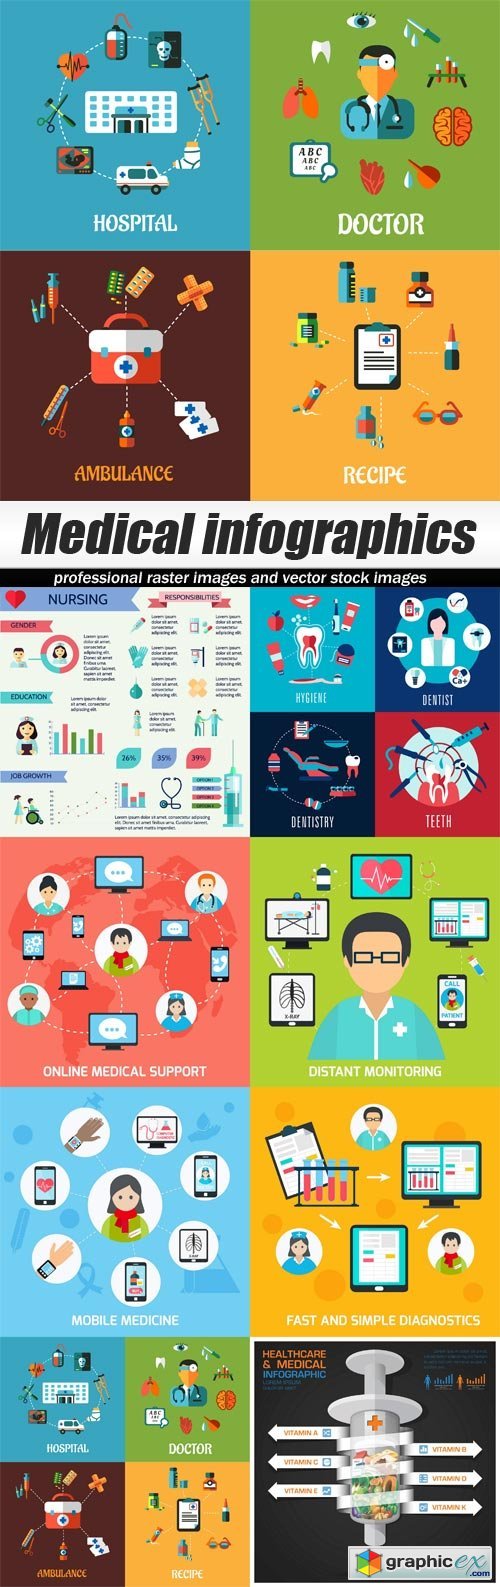 Medical infographics